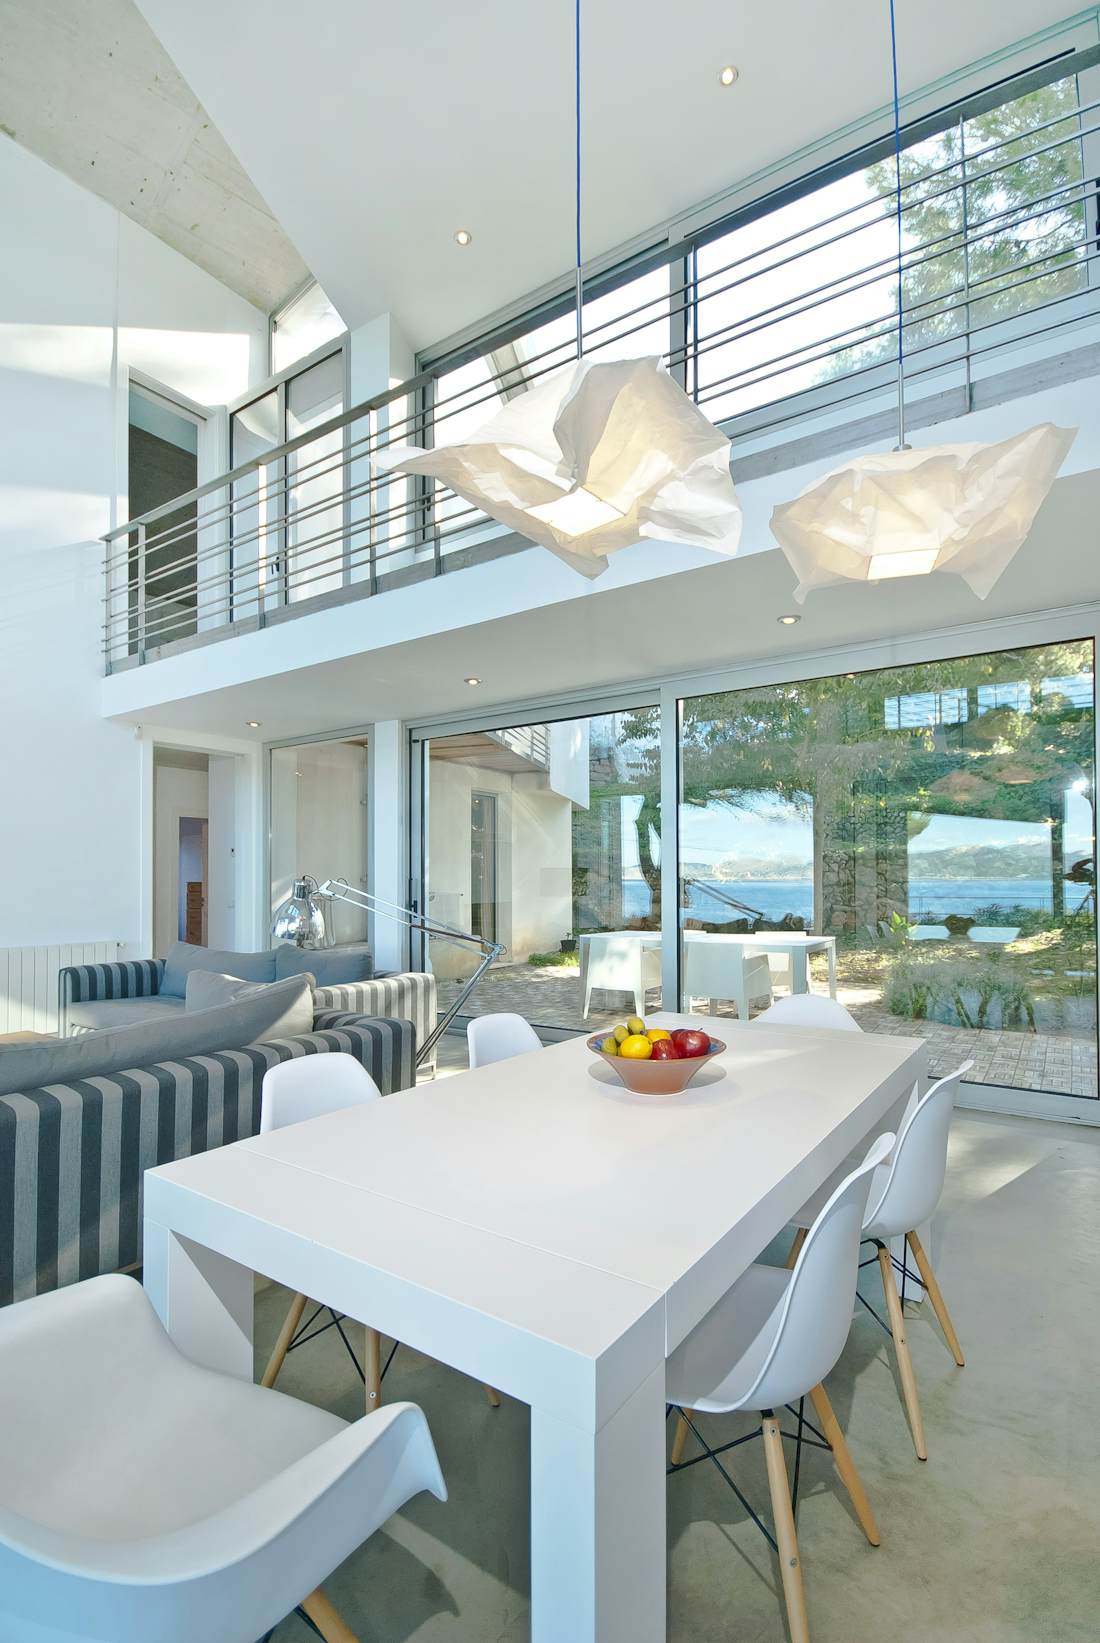 Mallorca accommodation - Villa H20 - Beautiful open plan dining room at sea view villa H2O in Mallorca